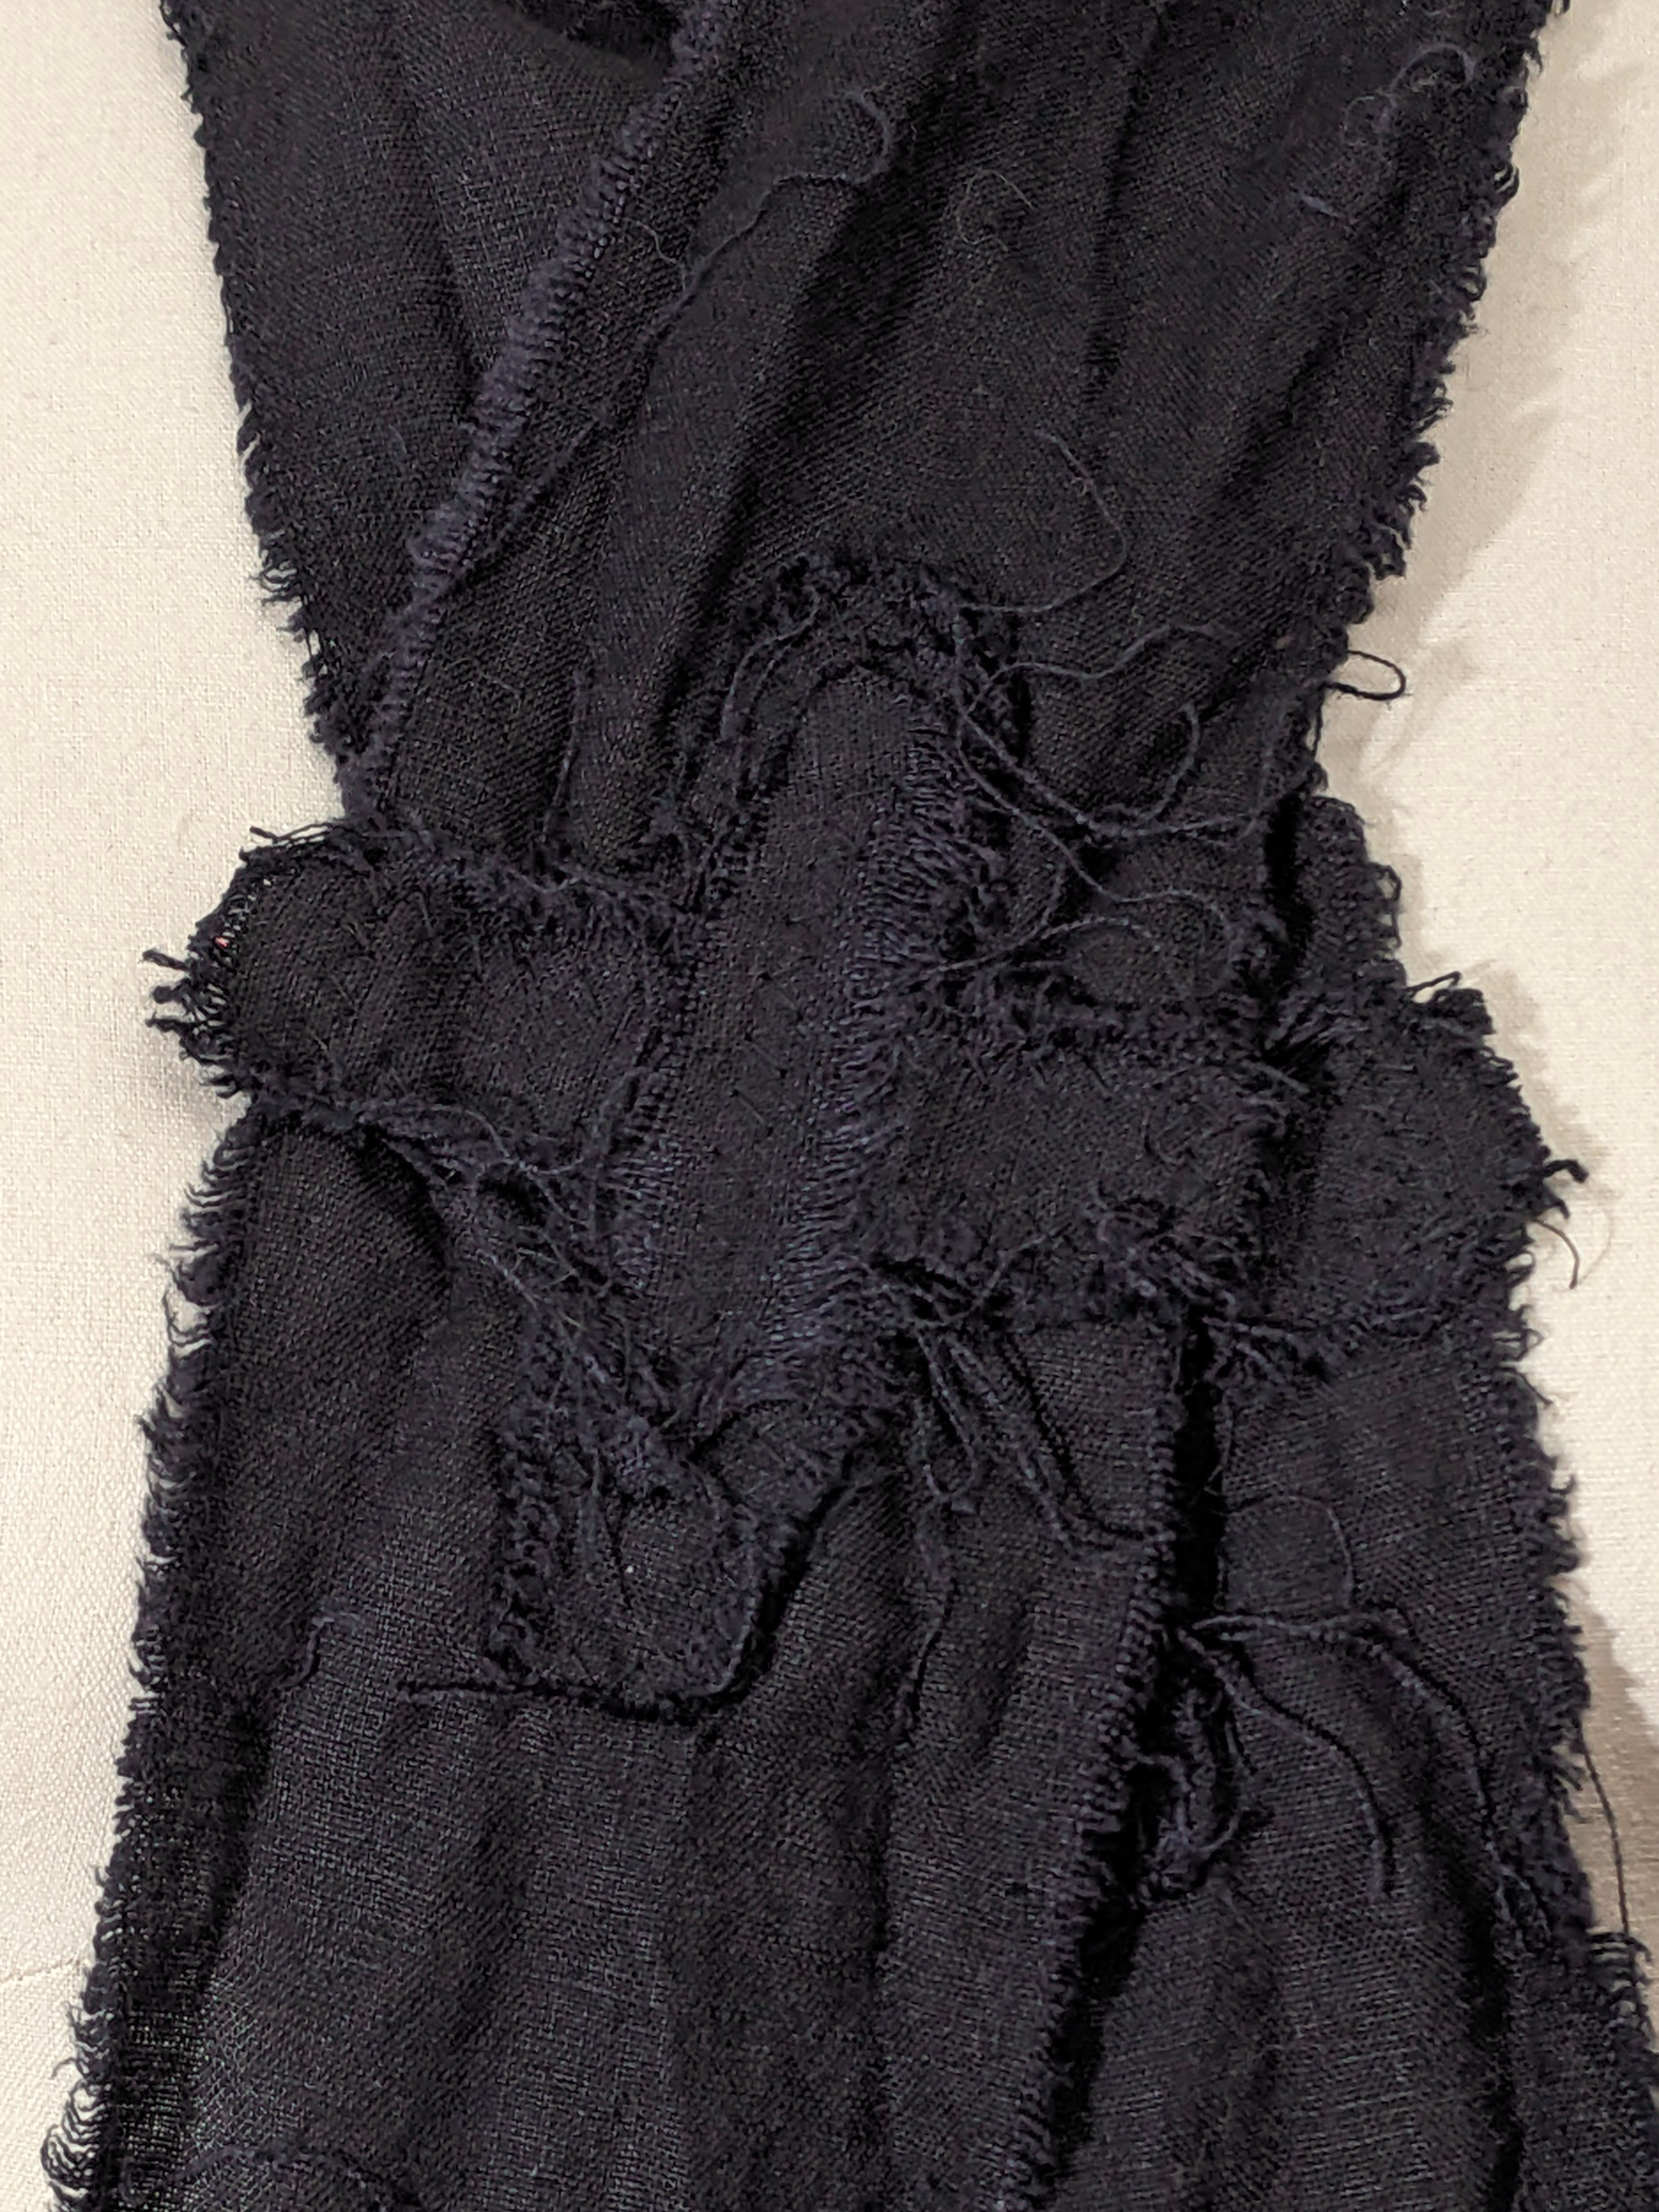 secret lentil scrappy black linen artifacted scarf: long, thin